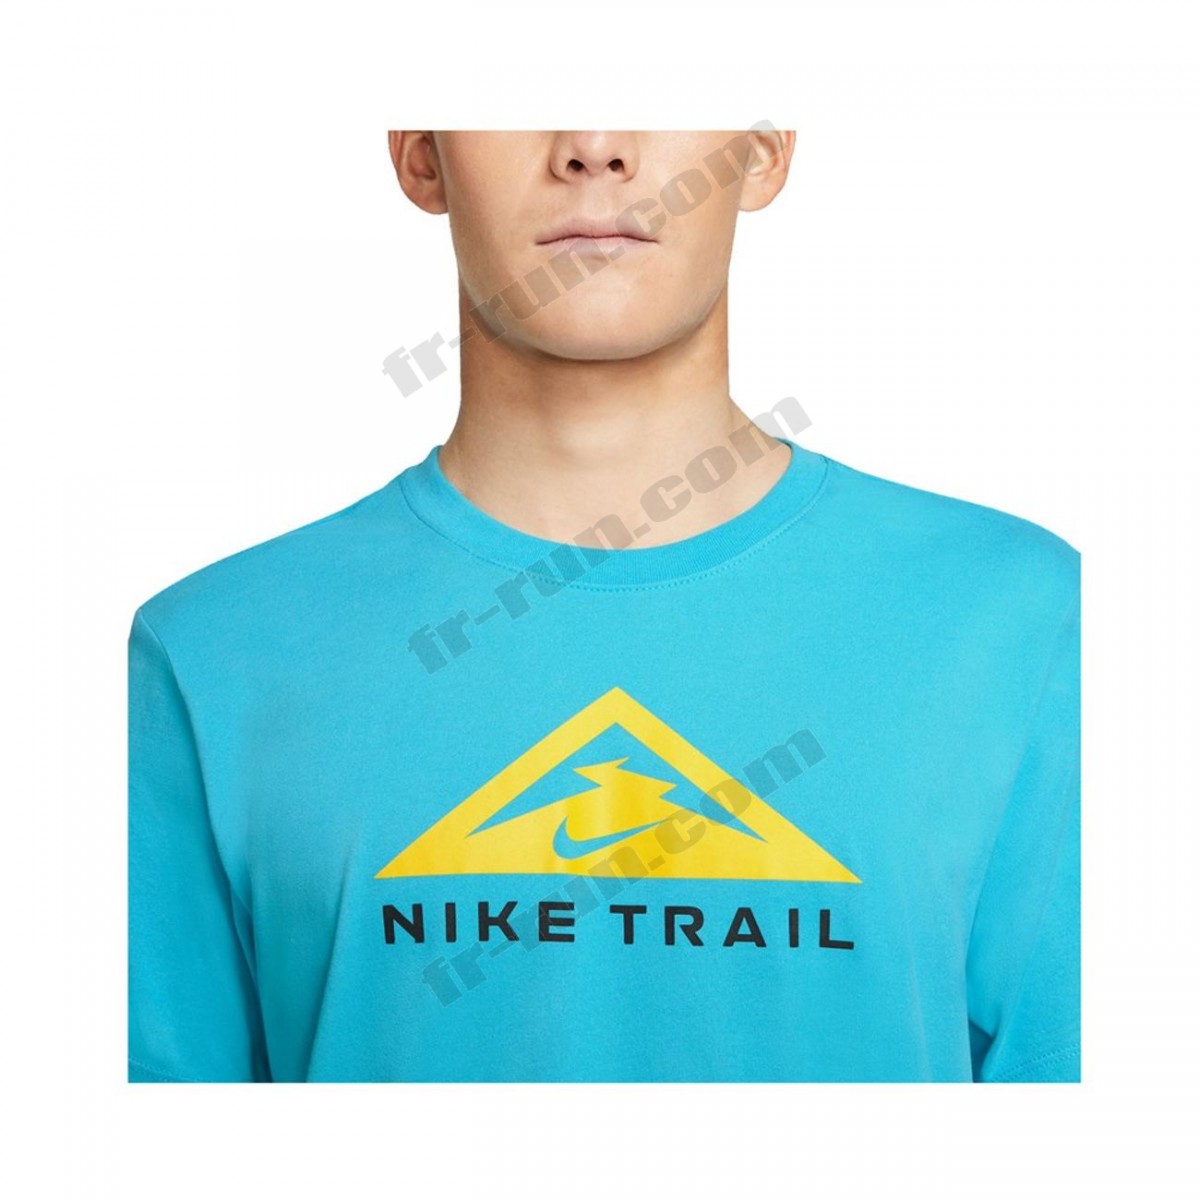 Nike/running homme NIKE Nike Trail Running ◇◇◇ Pas Cher Du Tout - -7